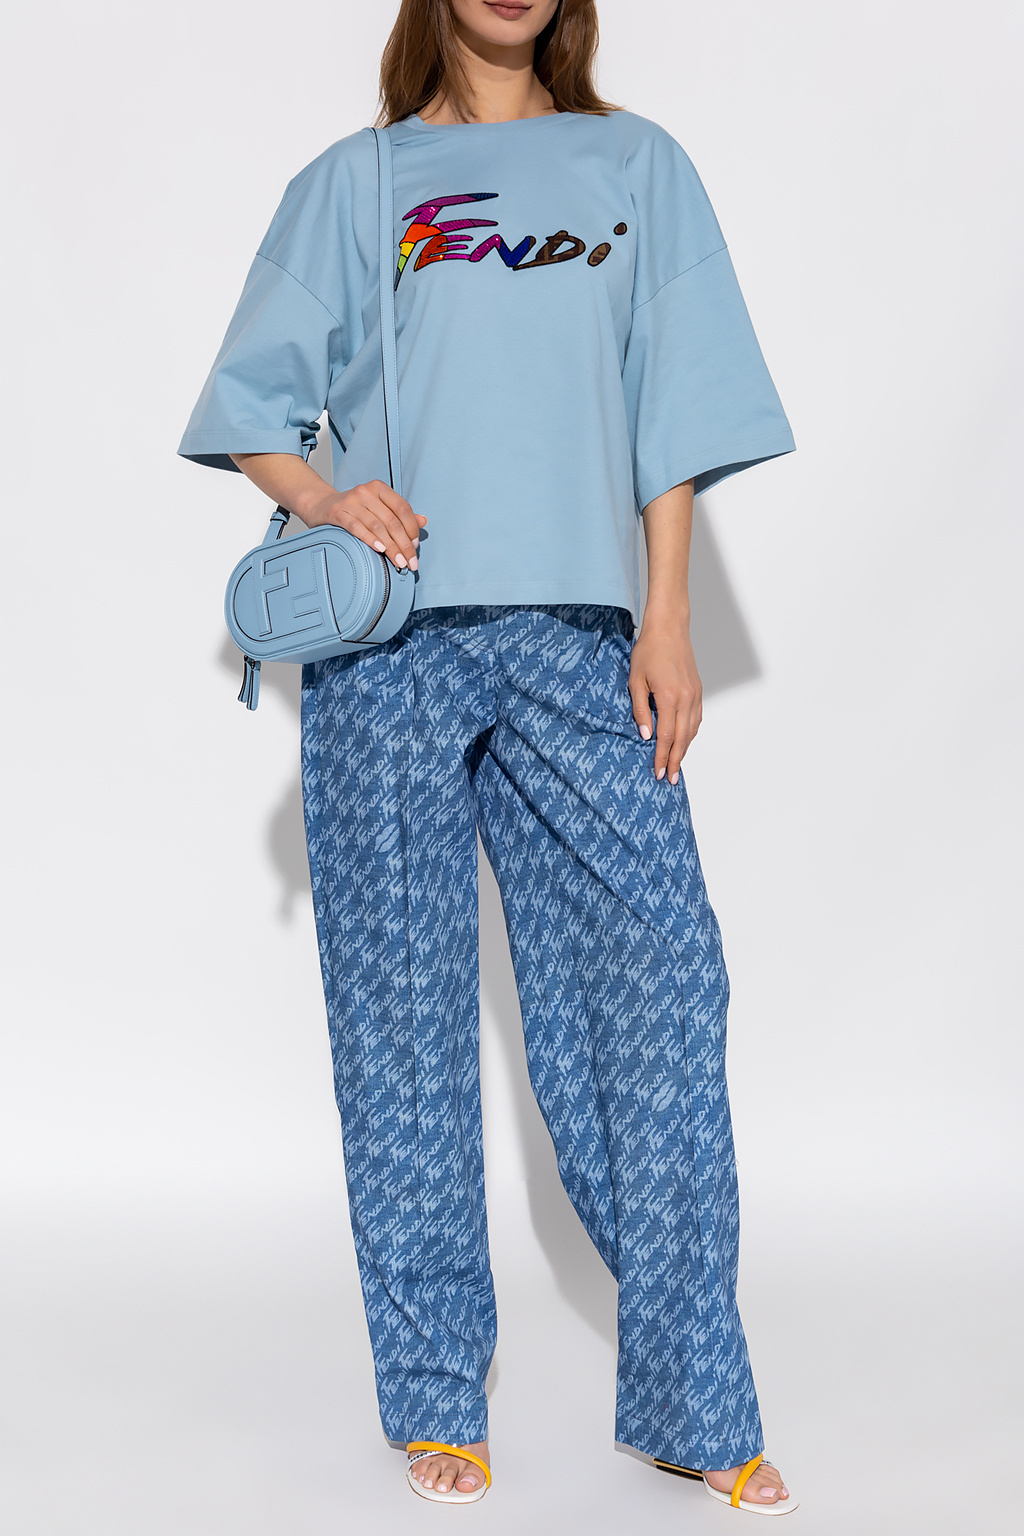 Fendi trousers Midi with Fendi Brush pattern